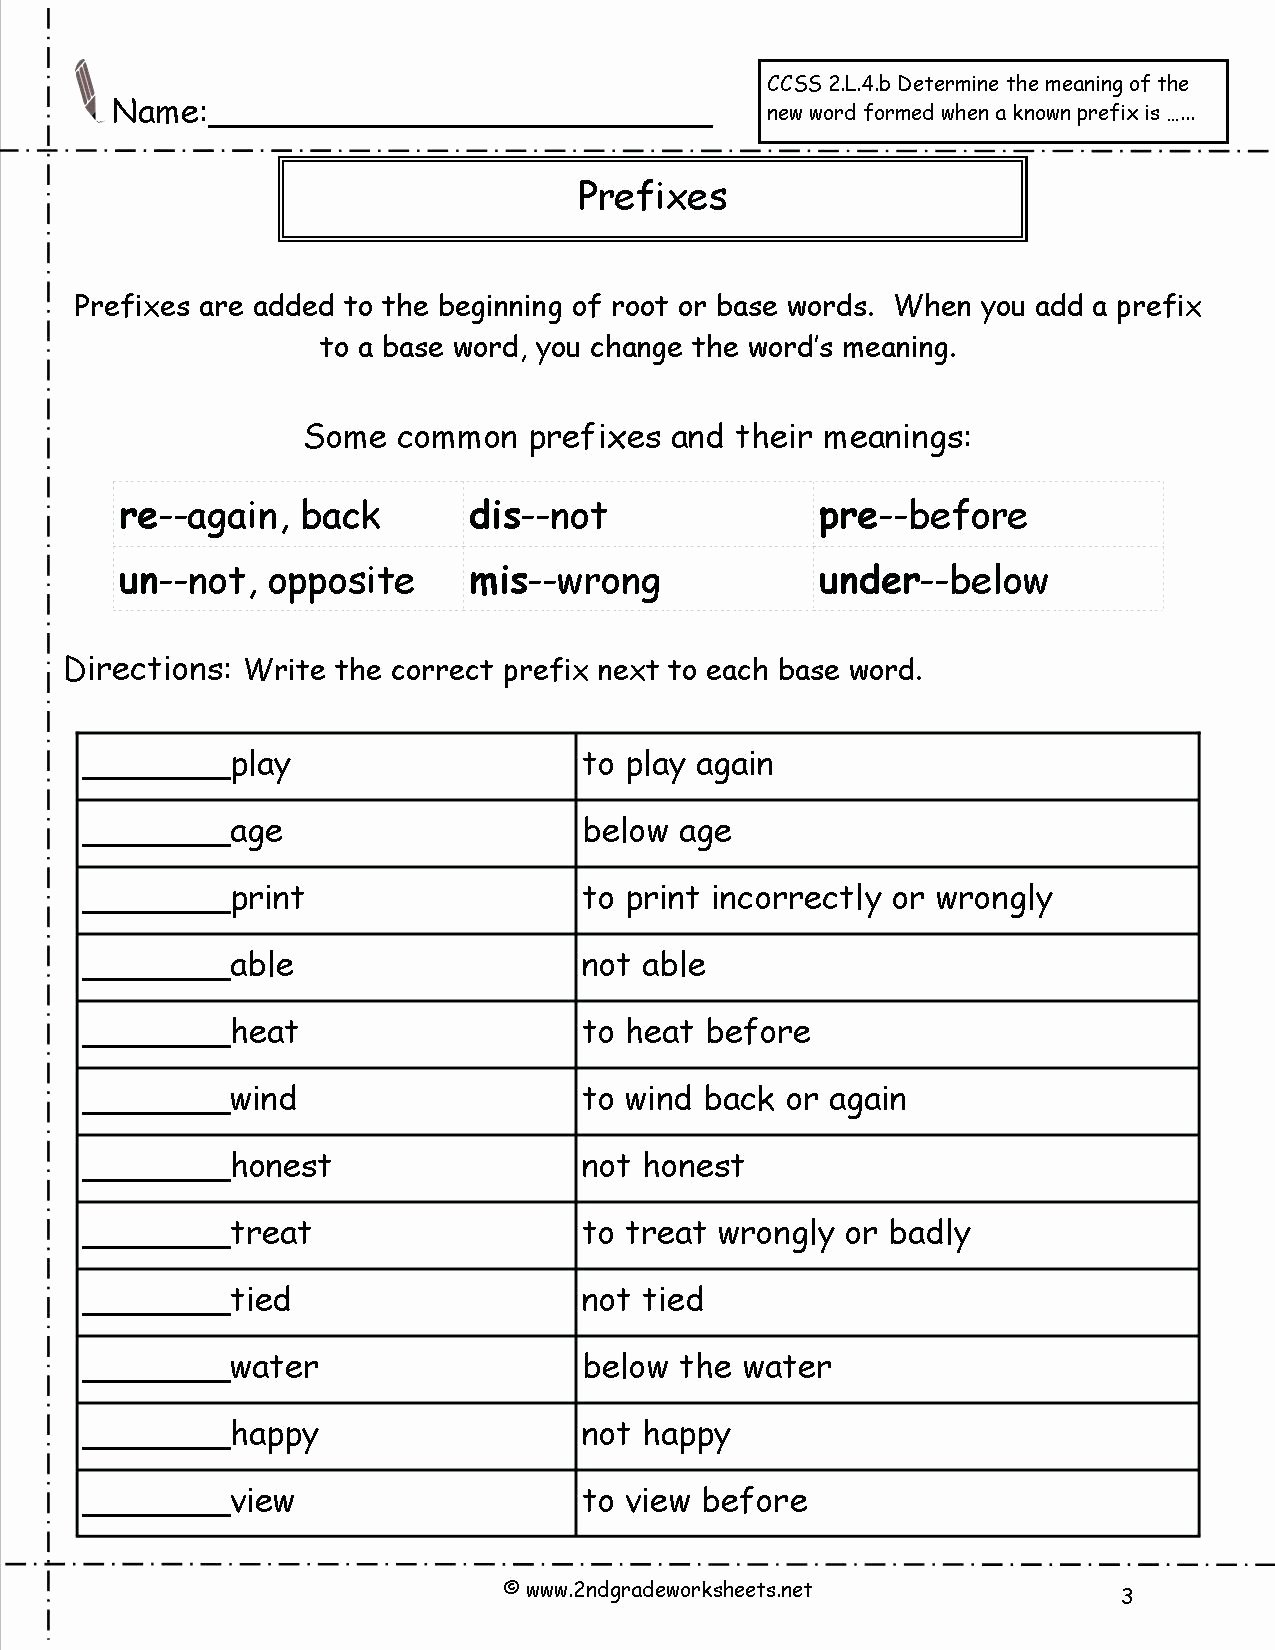 Medical Terminology Prefixes Worksheet Elegant Medical Terminology Suffixes Worksheet Prefixes and Root